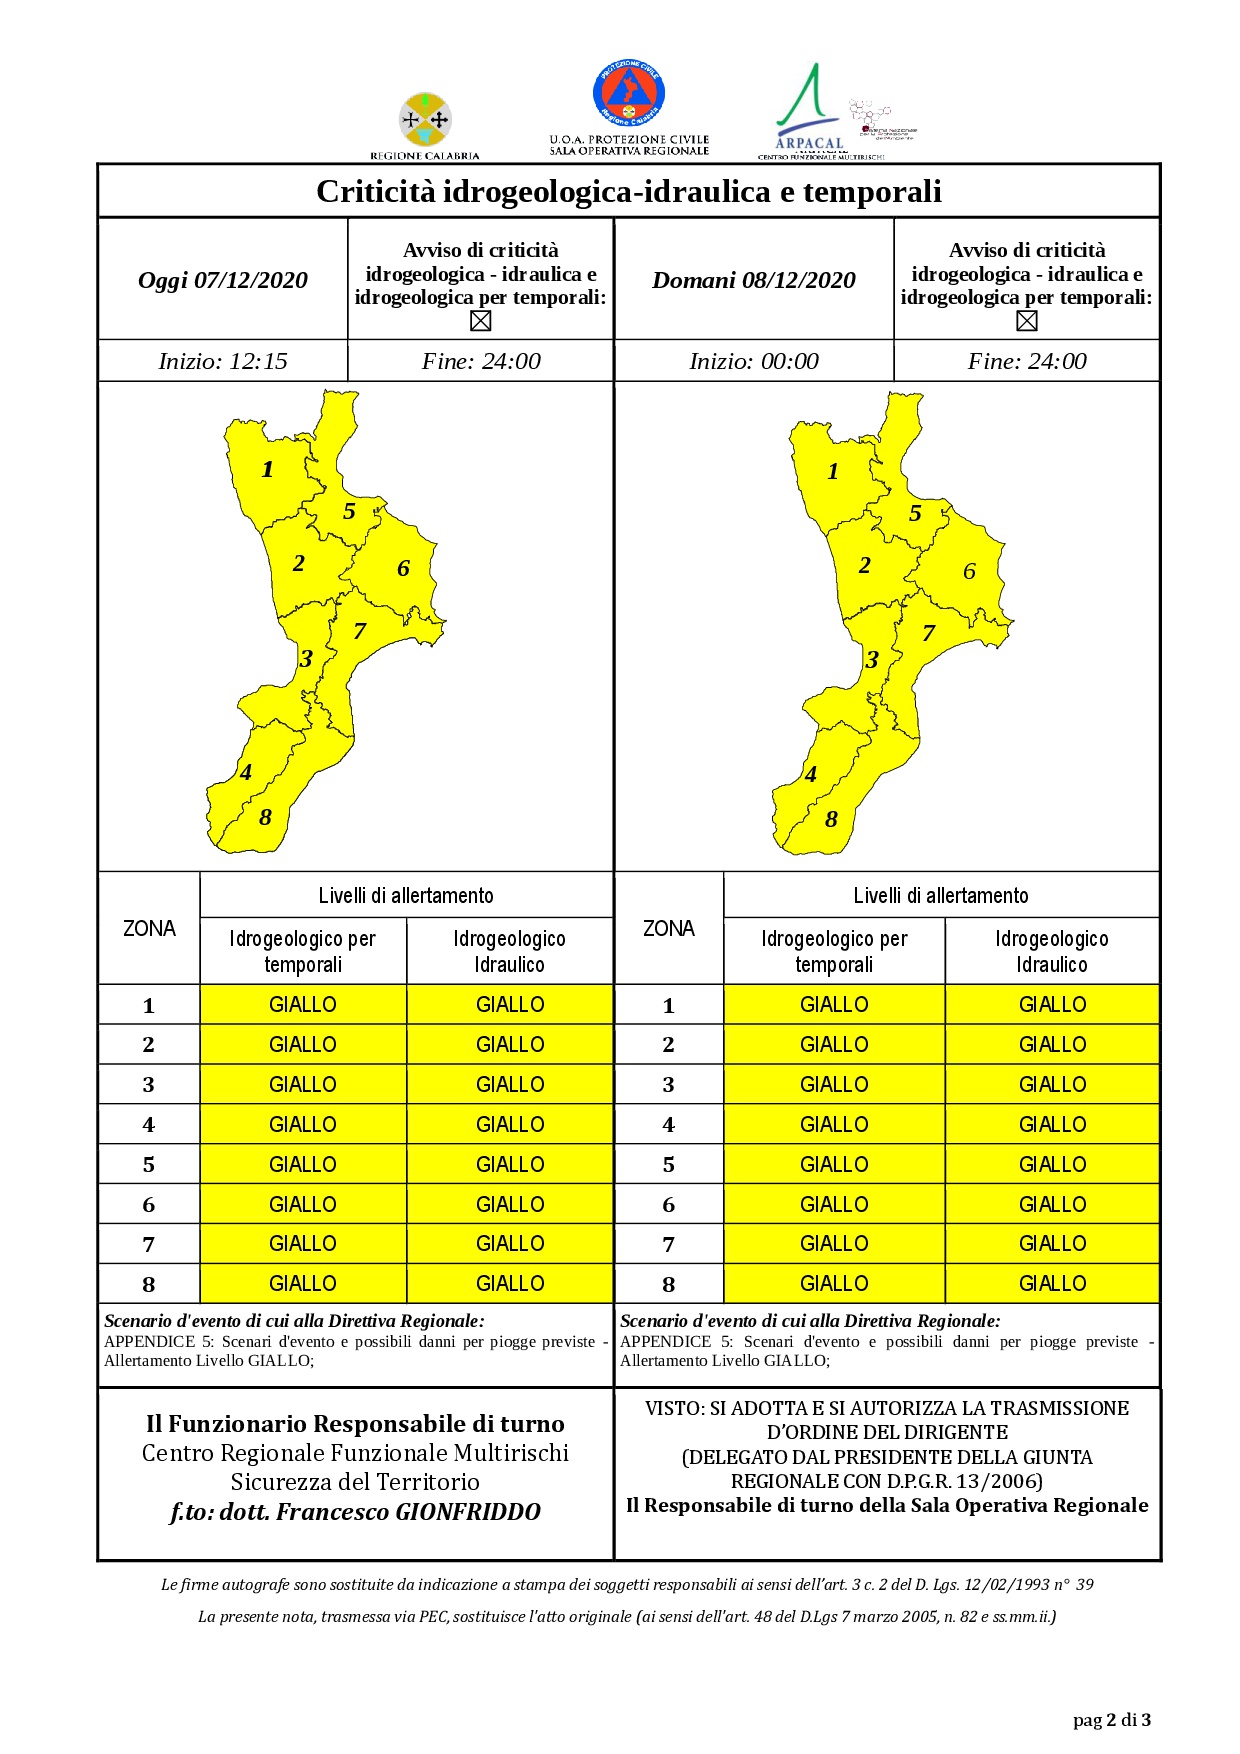 Criticità idrogeologica-idraulica e temporali in Calabria 07-12-2020